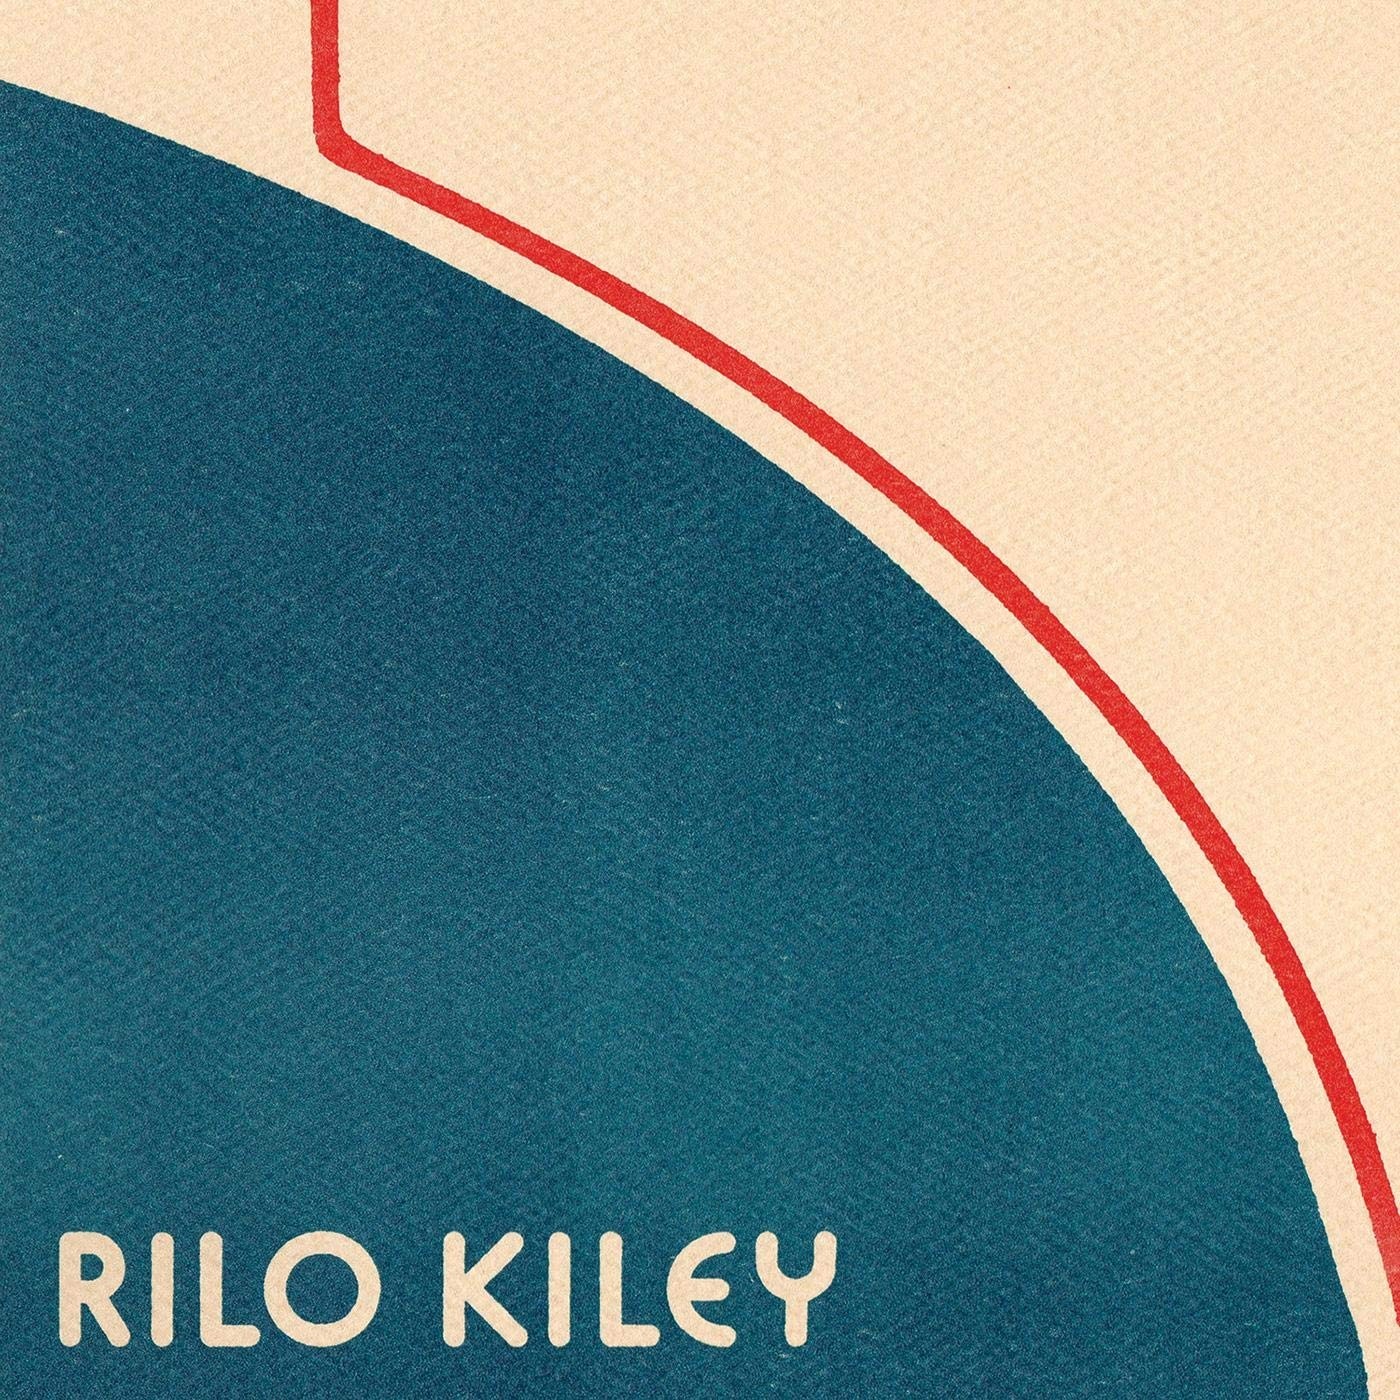 Rilo Kiley - Rilo Kiley (Colored) LP